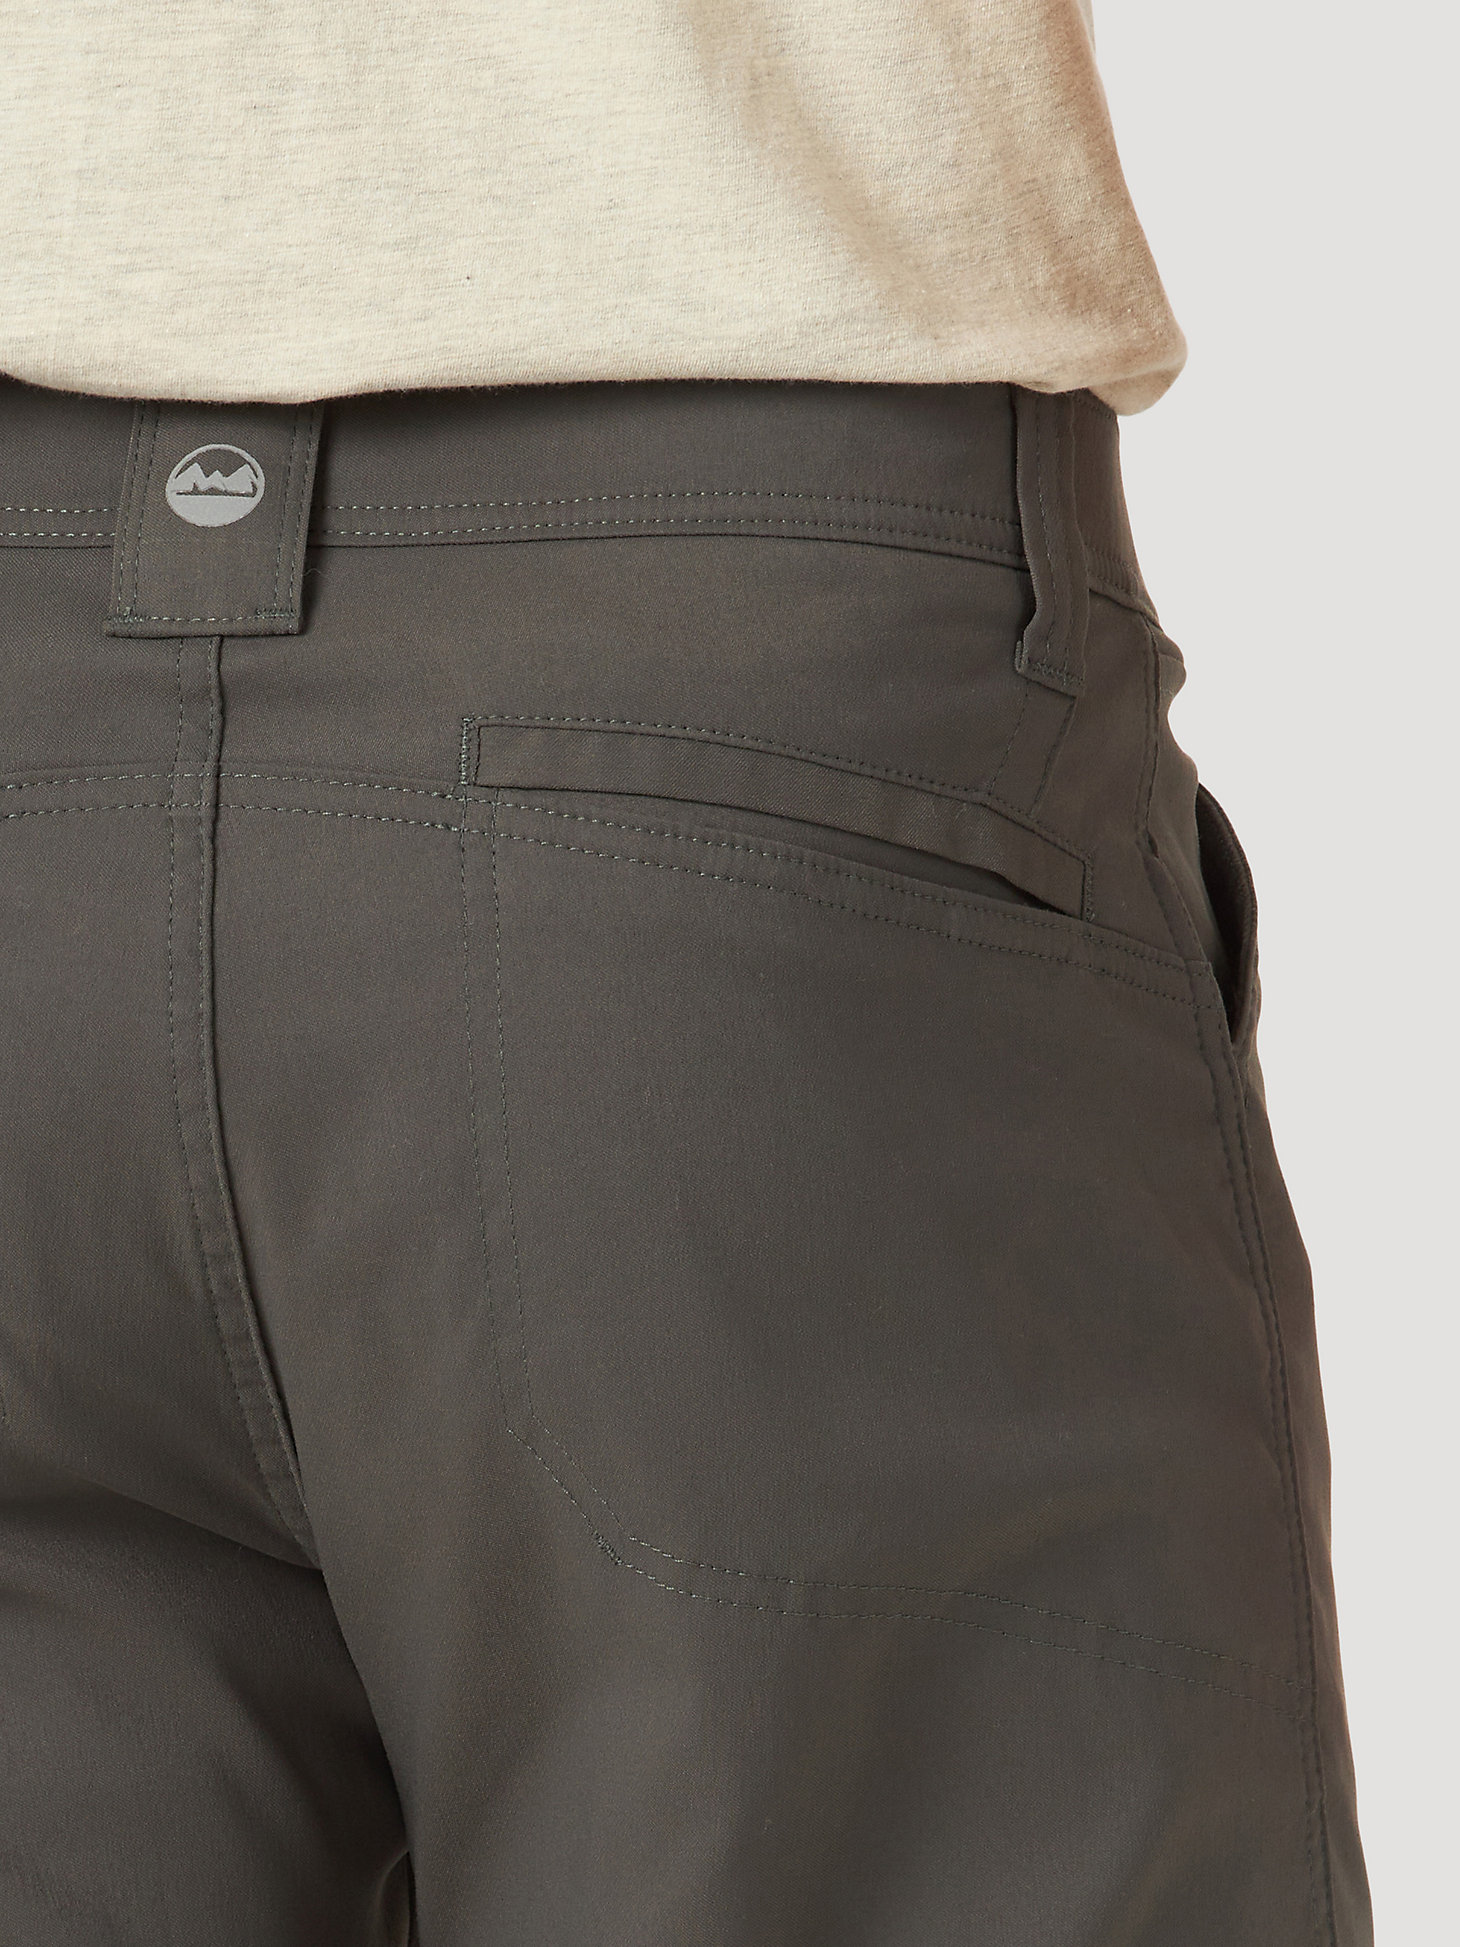 Men's Wrangler® Flex Waist Outdoor Cargo Pant in Asphalt alternative view 4